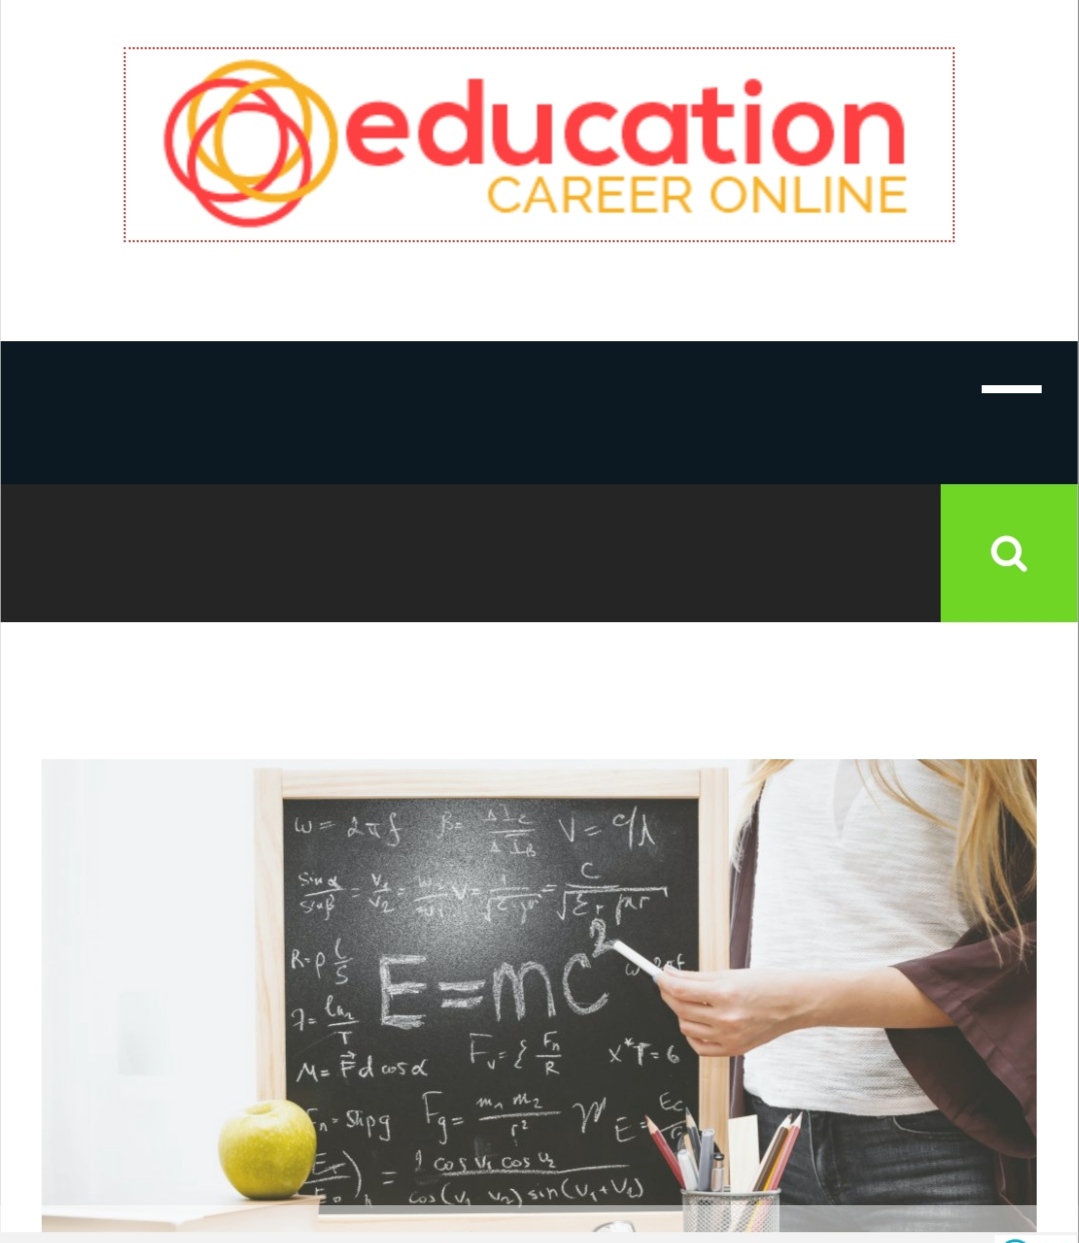 educationcareeronline.com